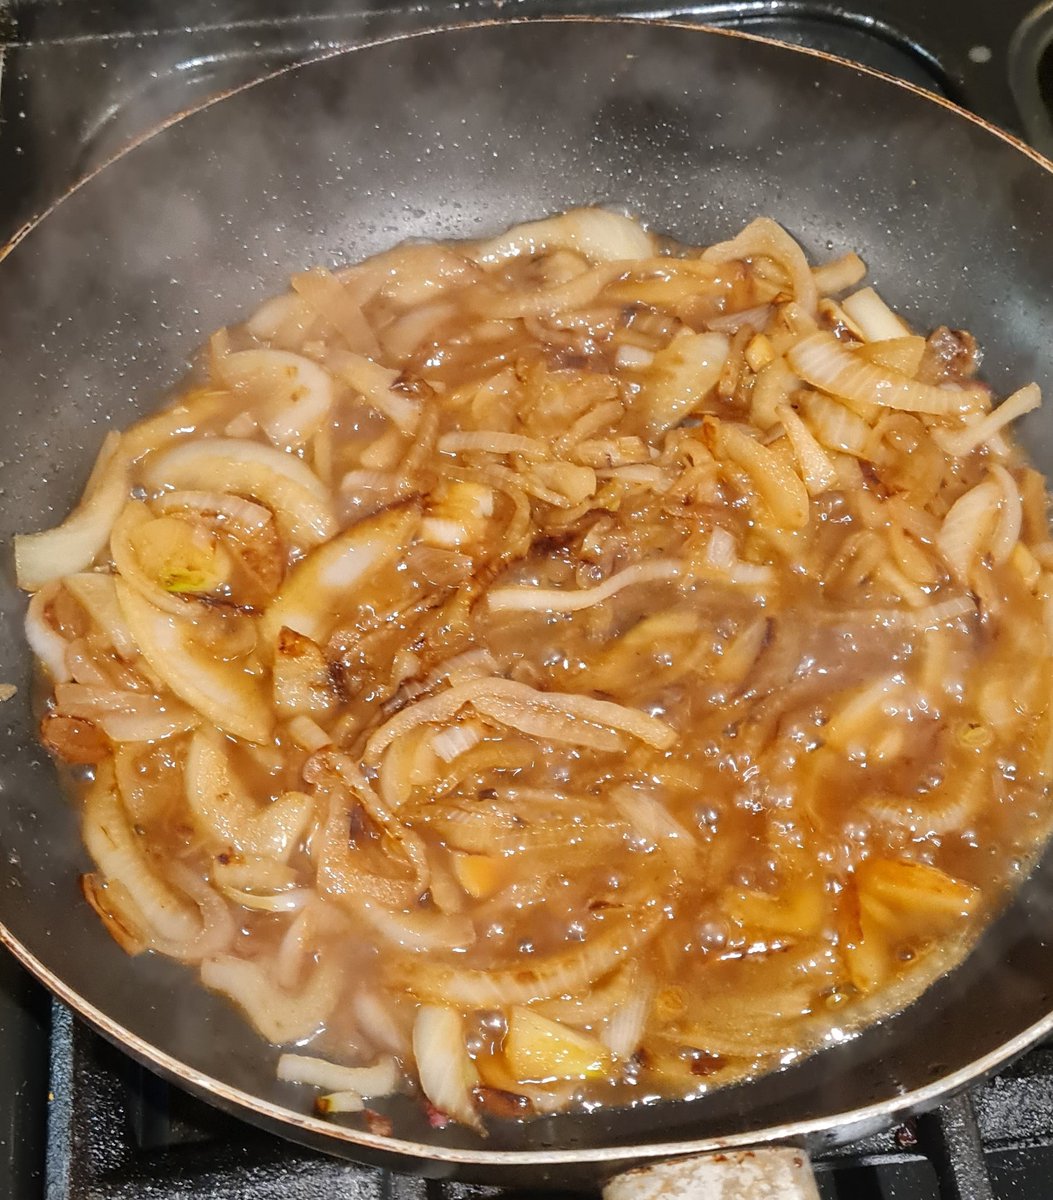 Sausage and fair ground type onion sarneys for tea. Bloomin delicious #annasbangers #biteintobritish @AnnaLongthorp